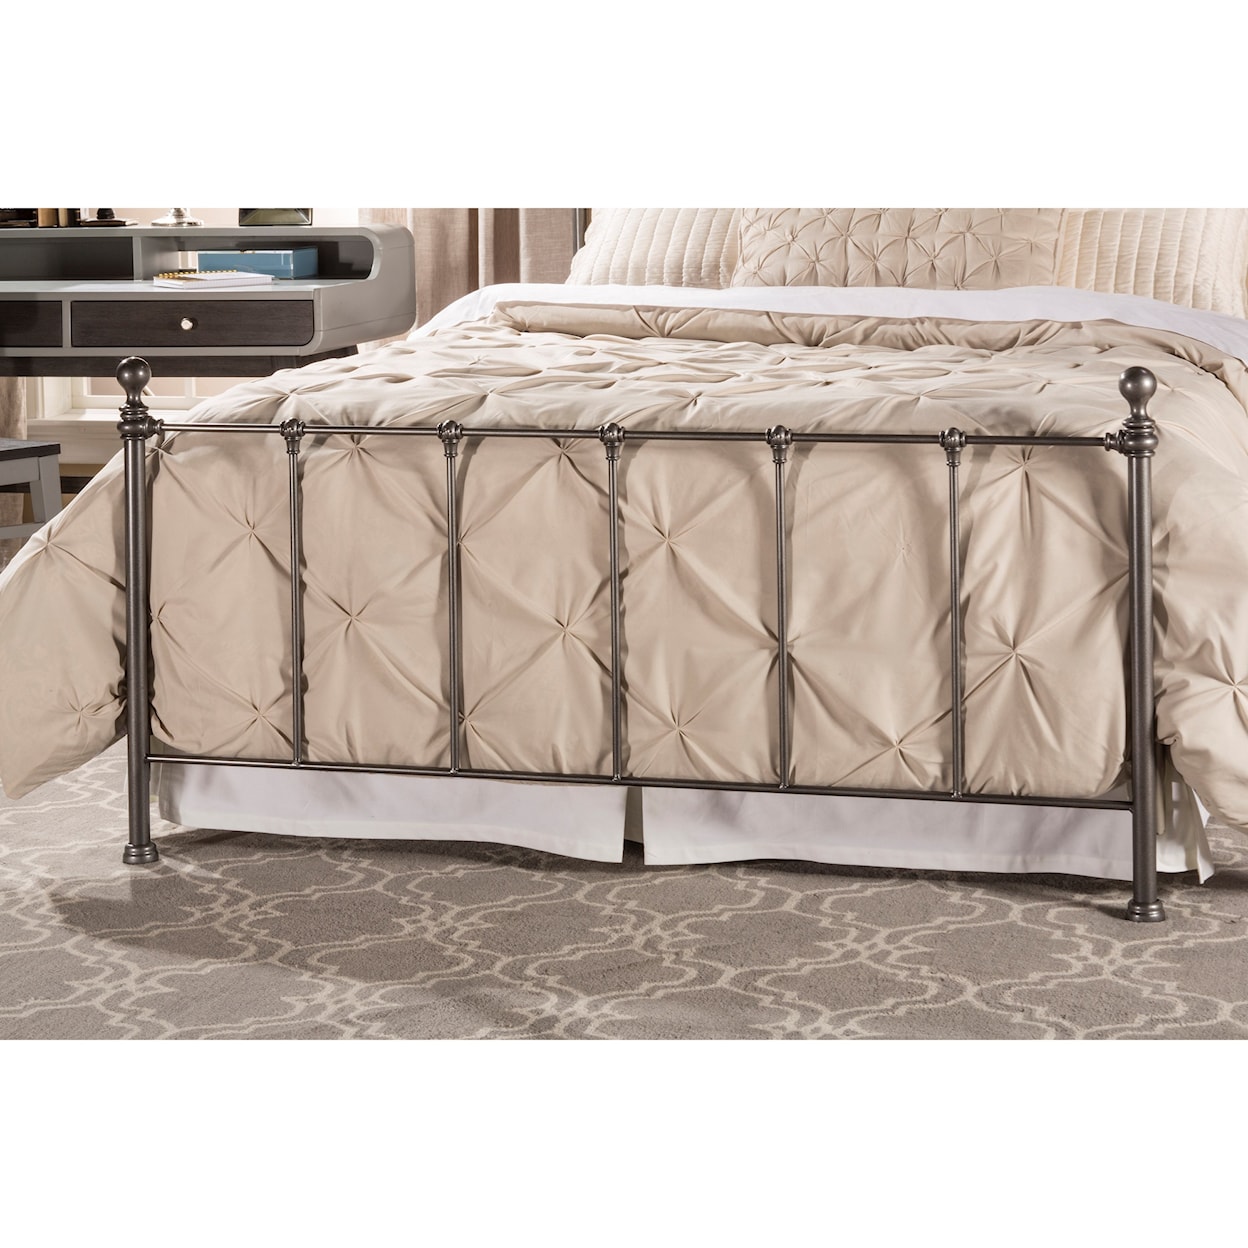 Hillsdale Metal Beds Full Bed Set